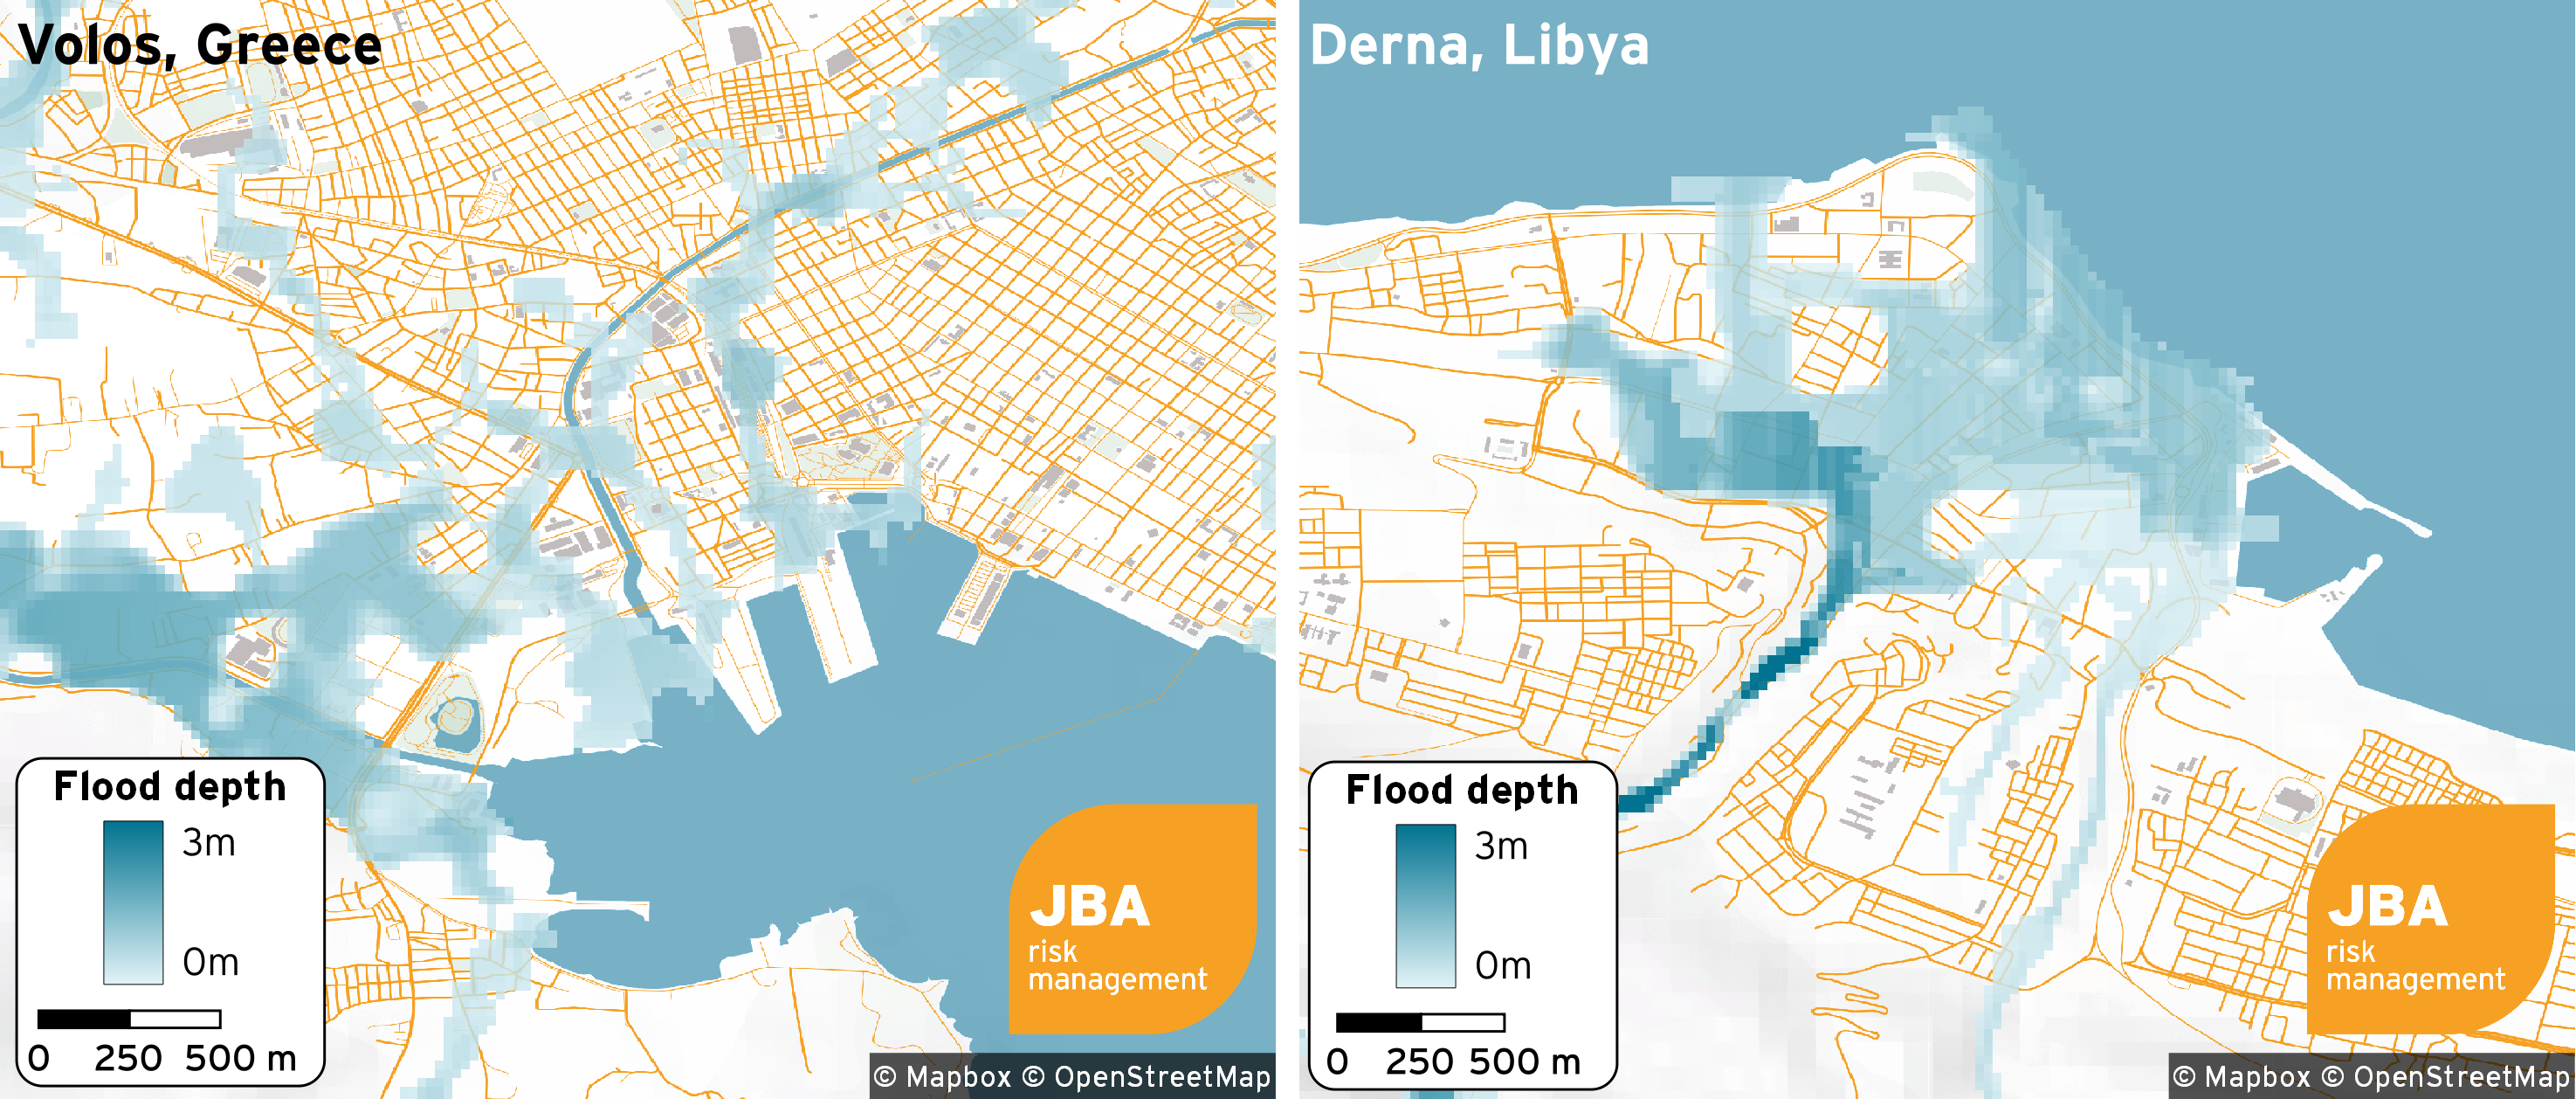 The flood depth map of Greece and Libya